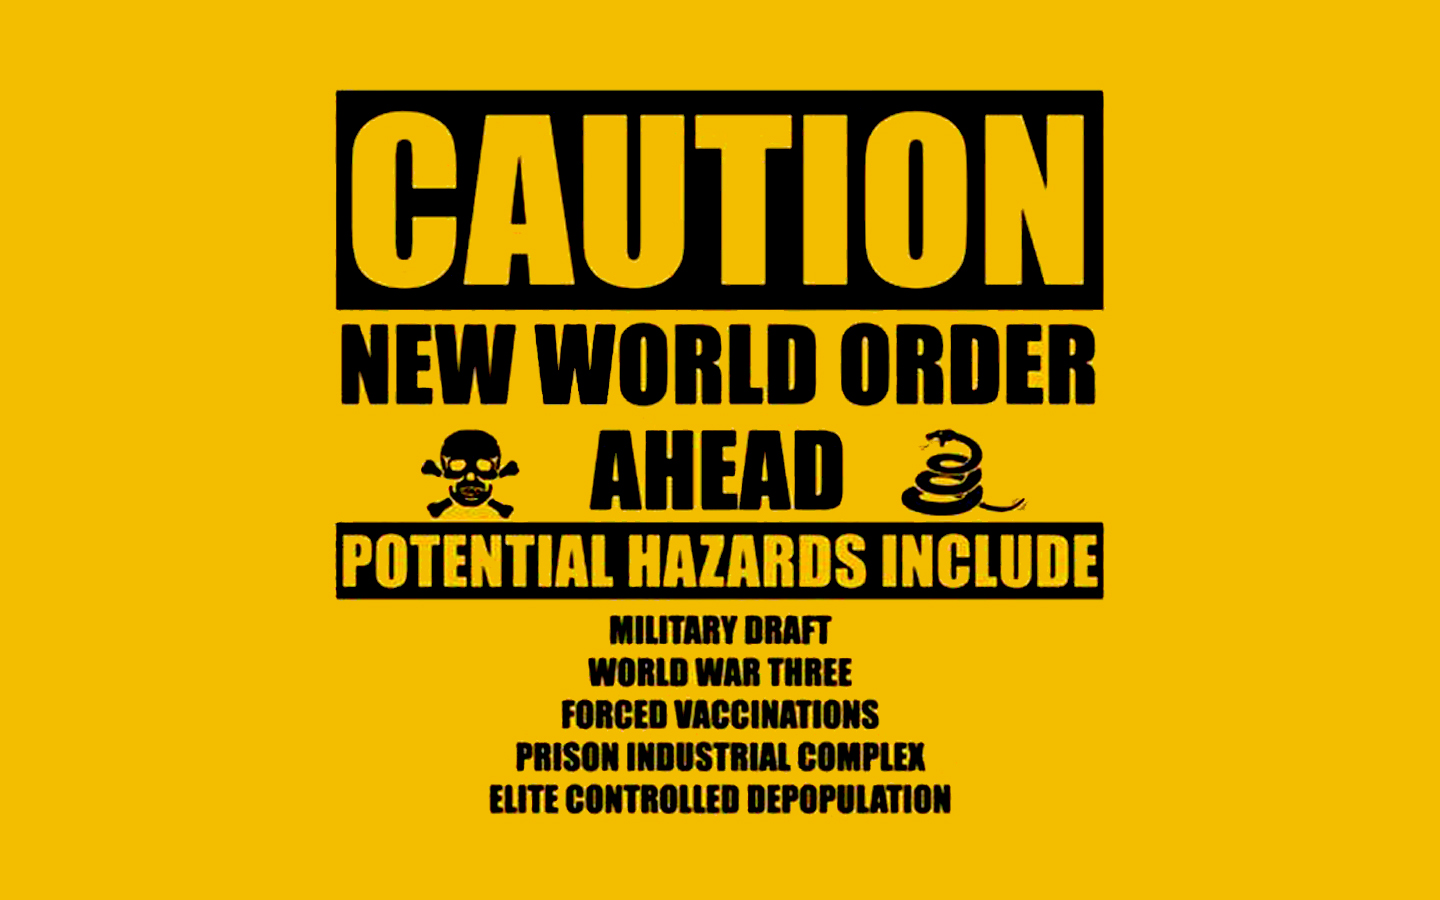 HD Wallpaper Nwo New World Order Caution Yellow Background Hazard By